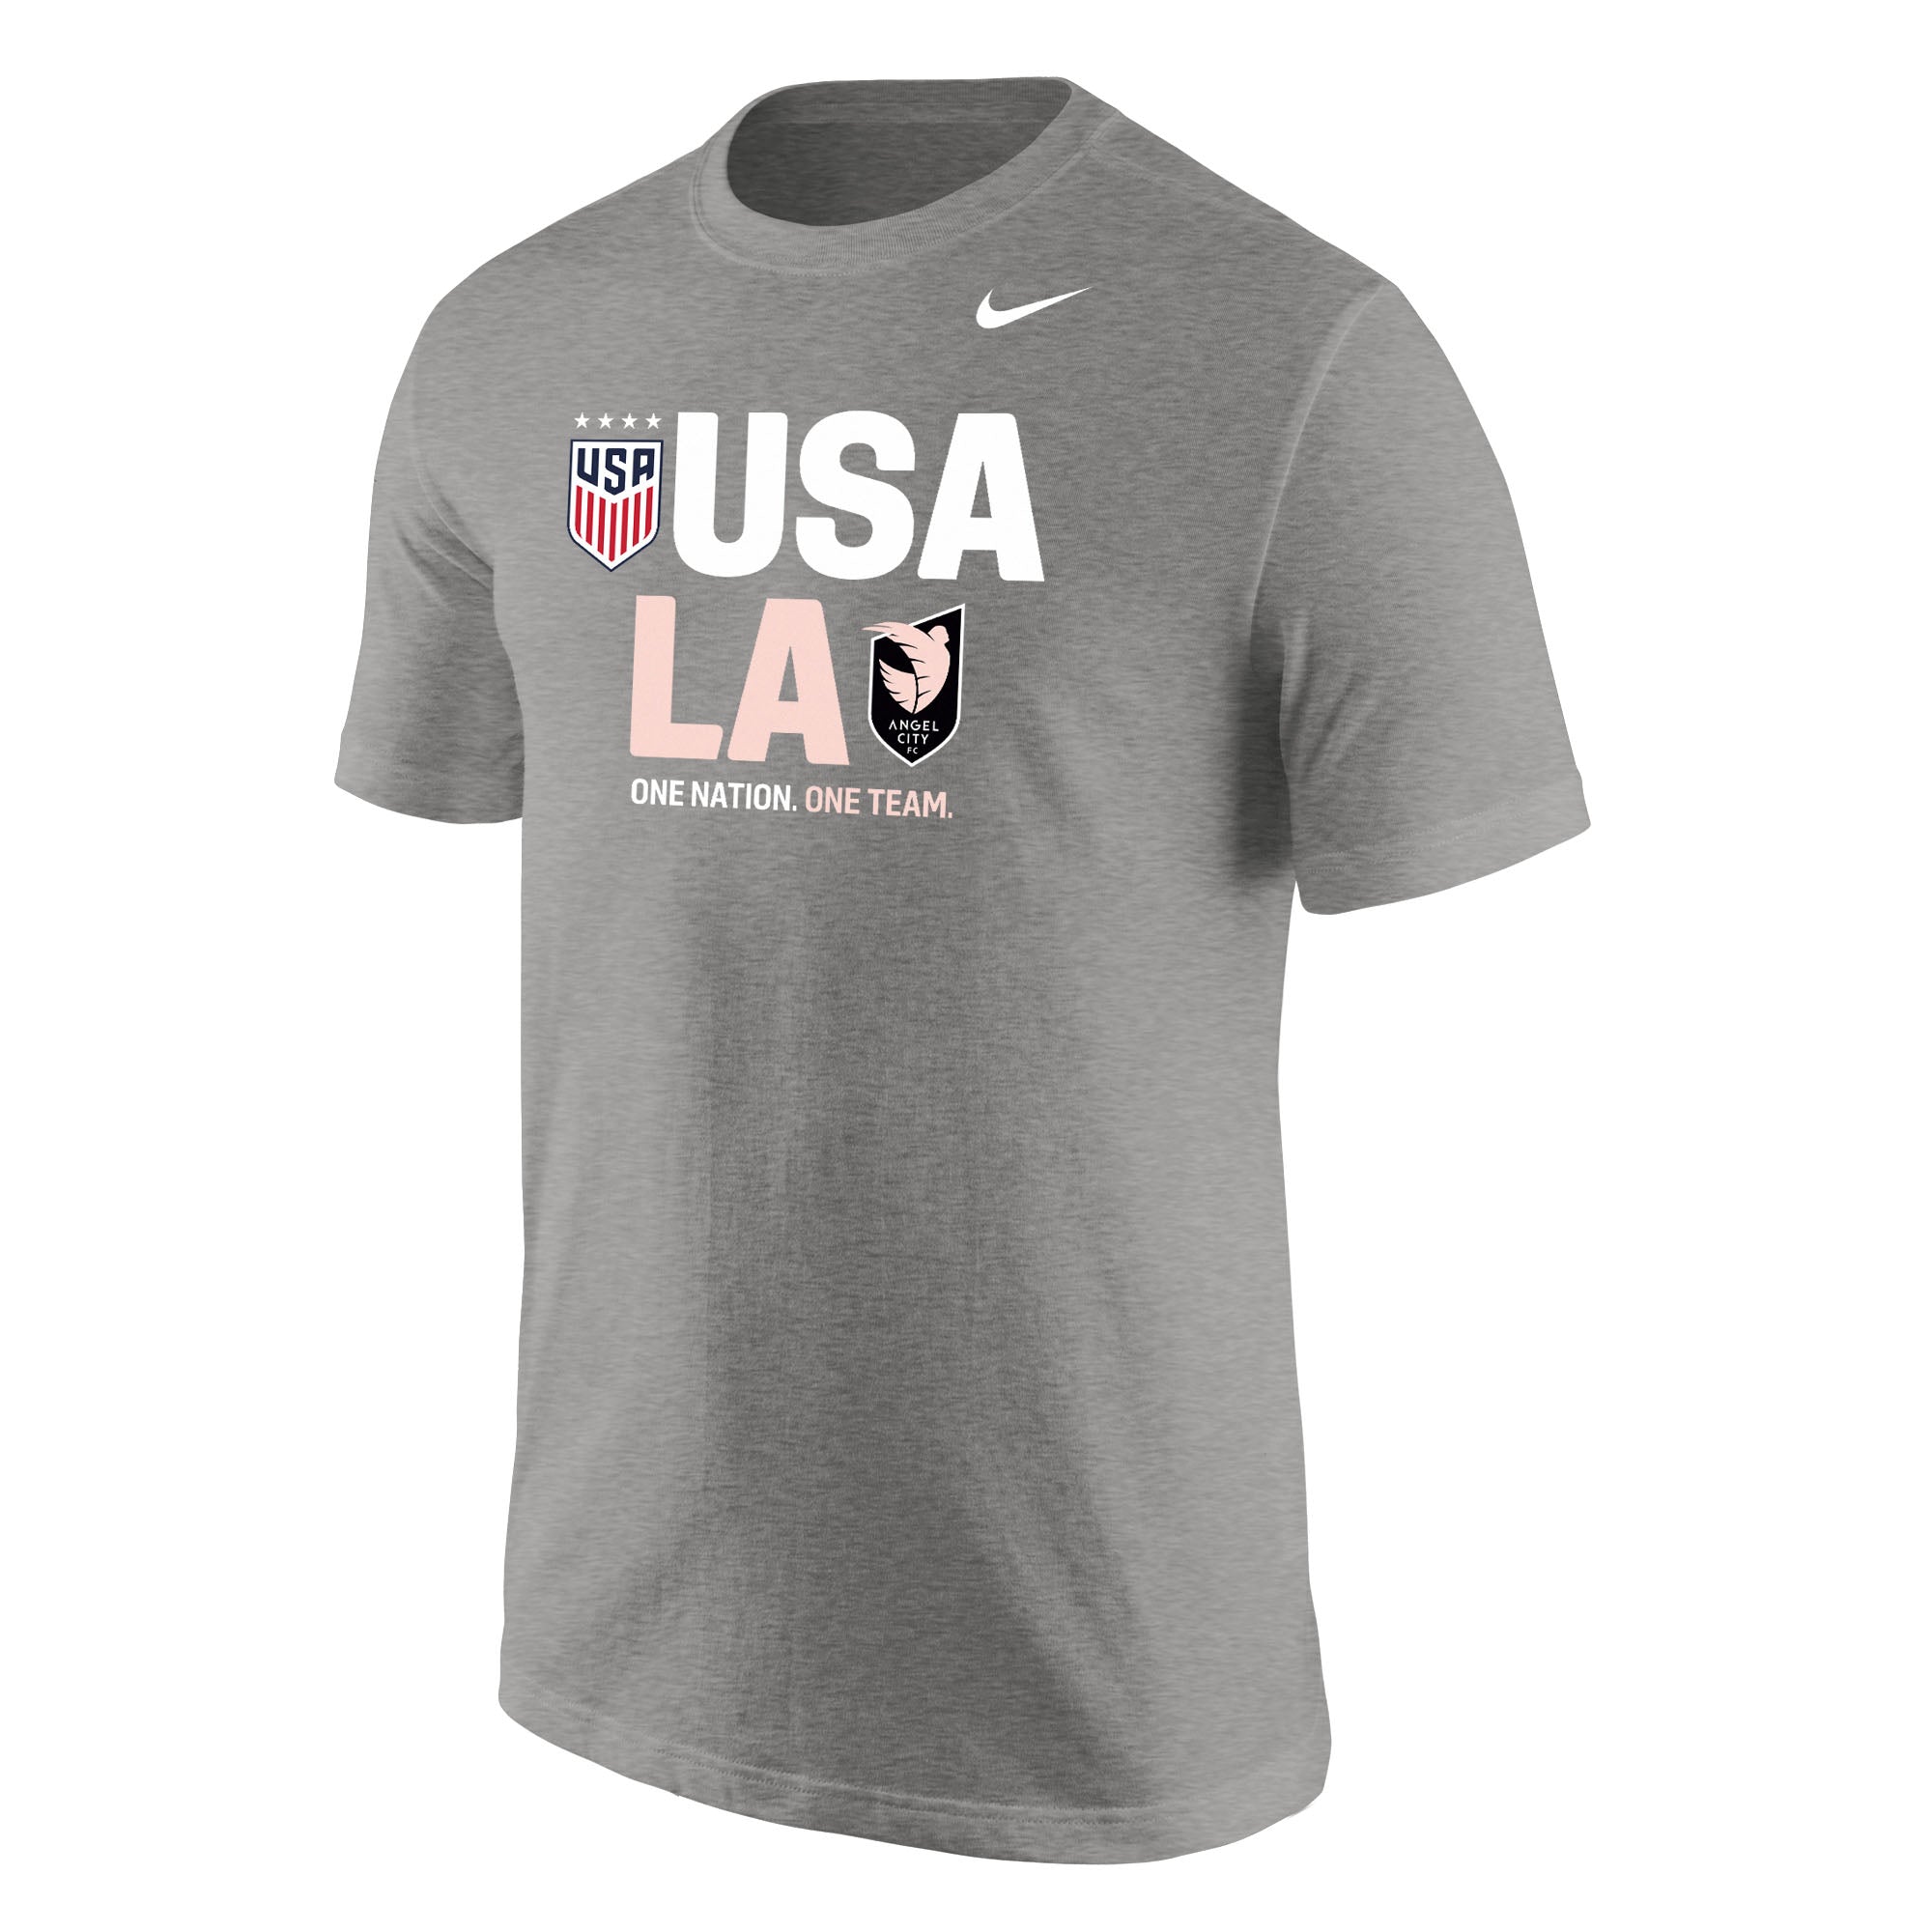 Angel City FC x USWNT Nike - Camiseta unisex de EE. UU.